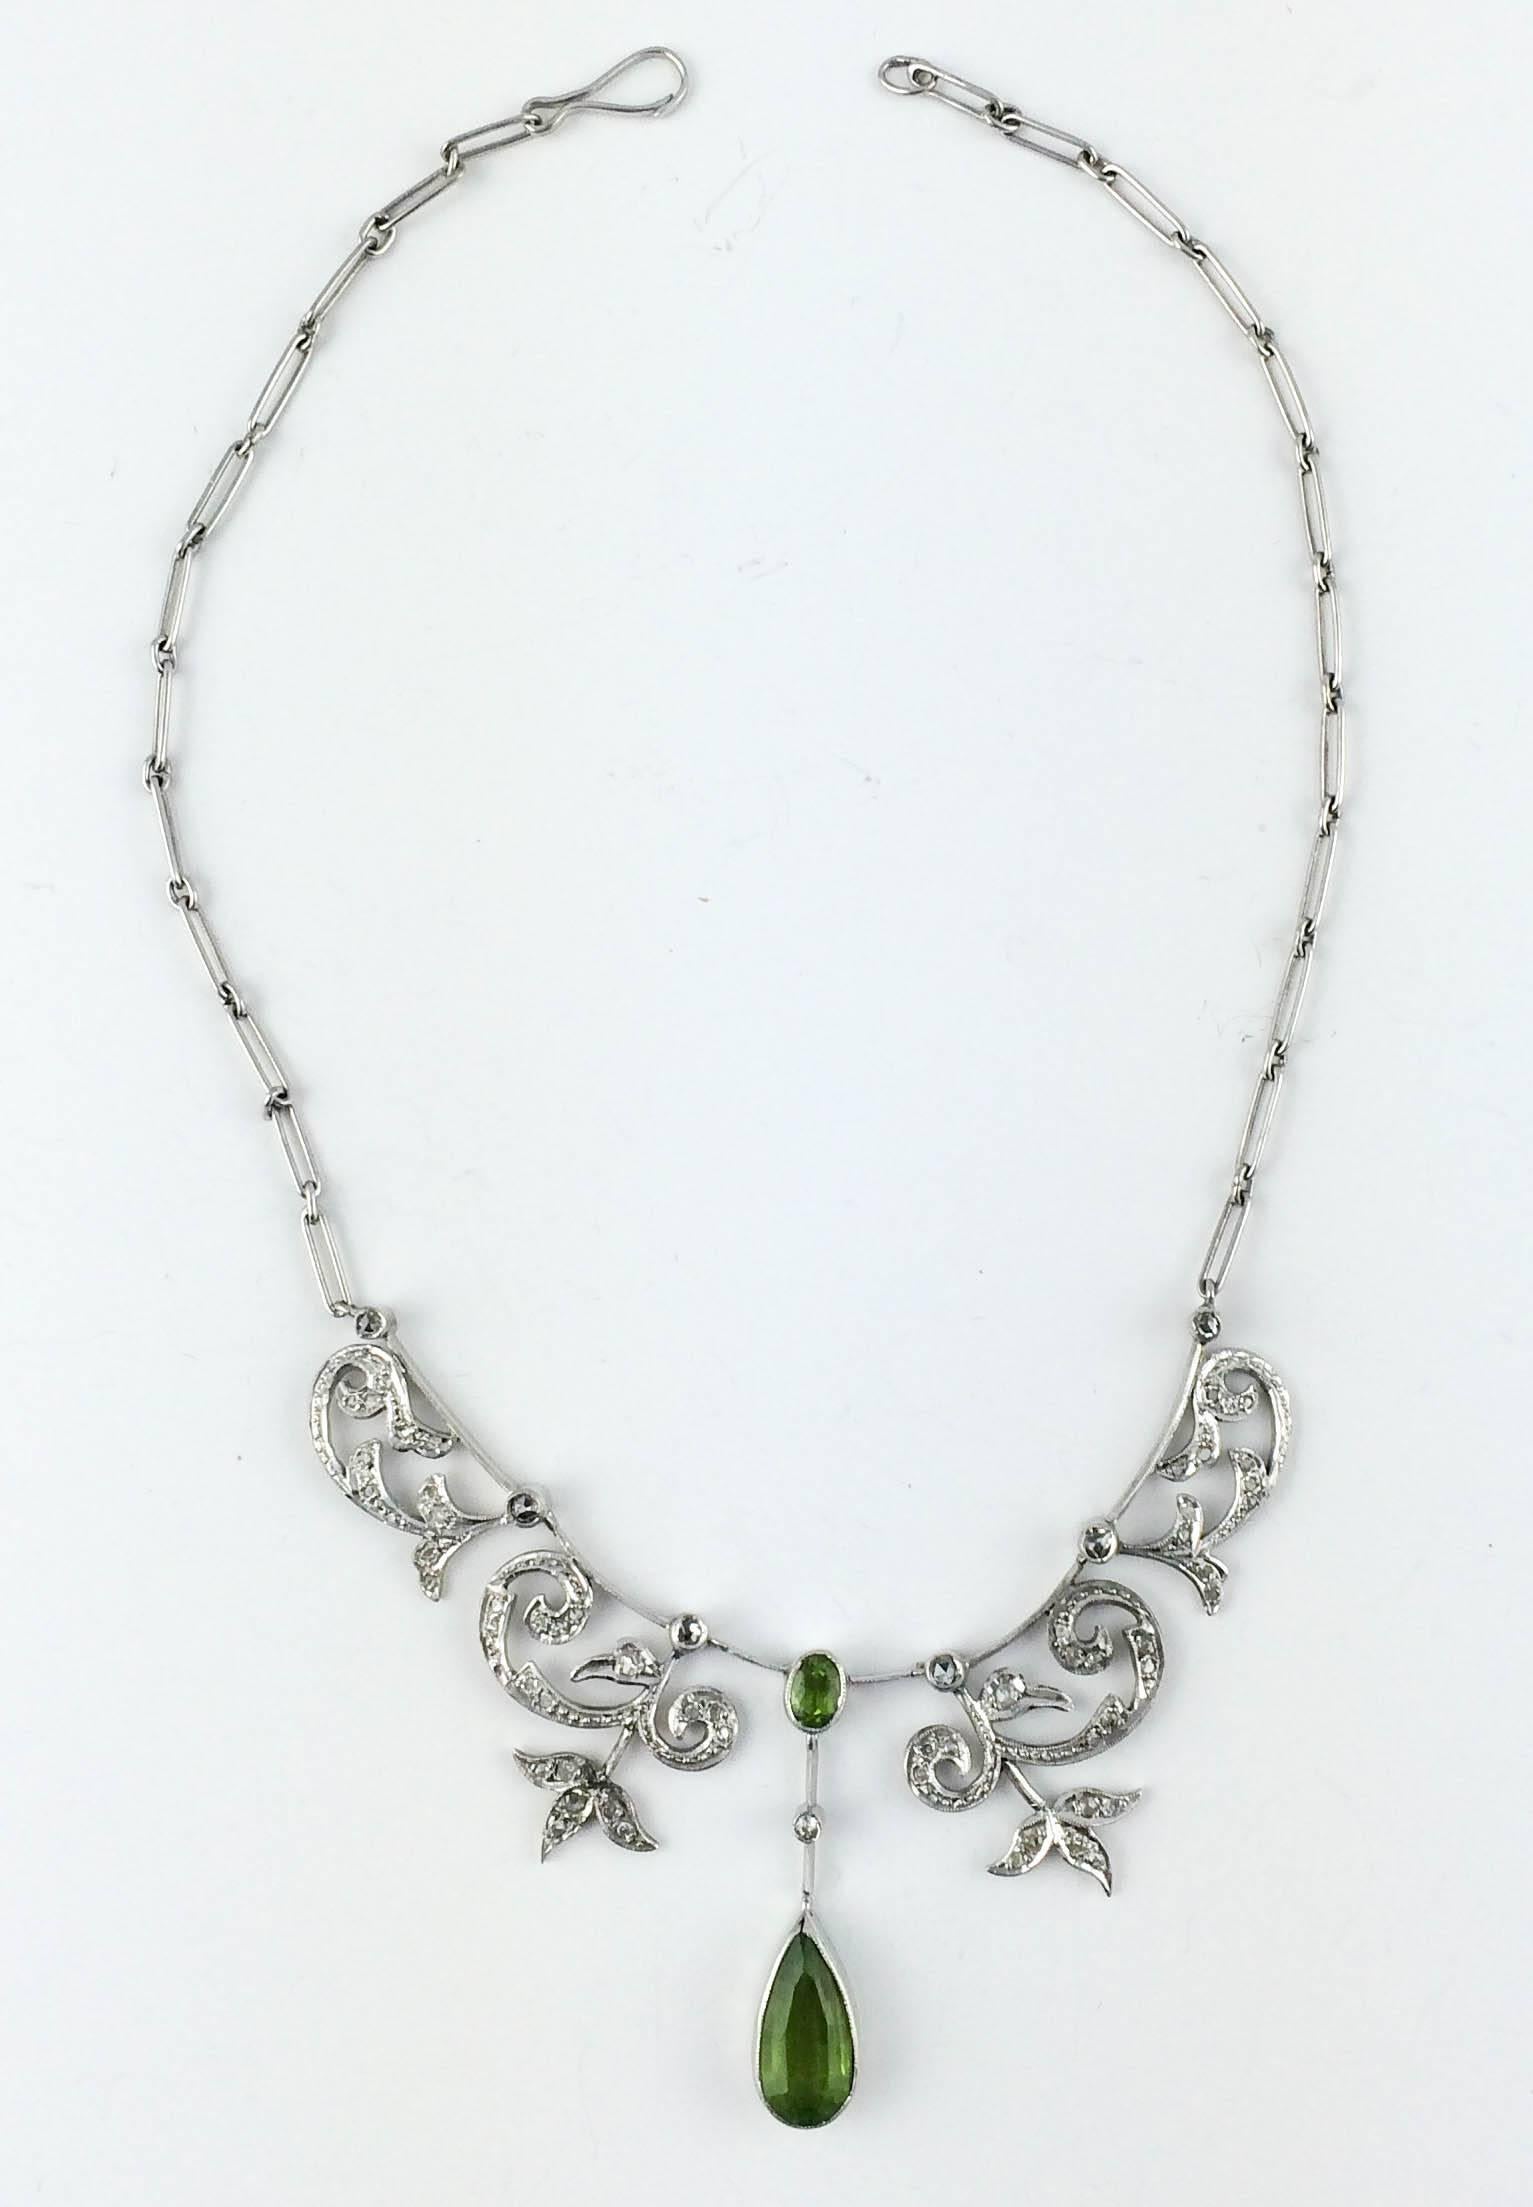 White Gold, Diamonds and Peridot Necklace - 1920s 2